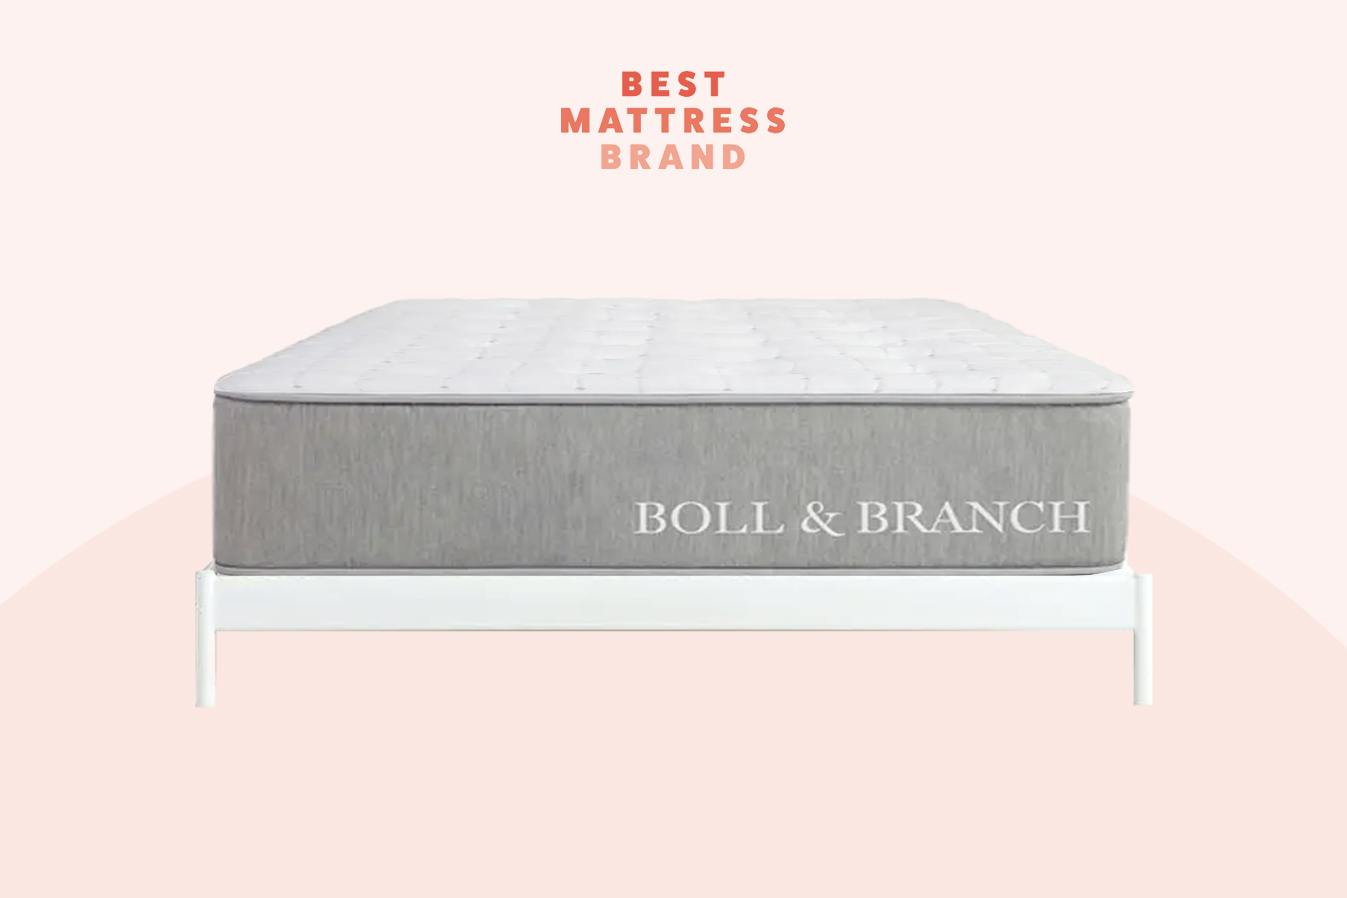 boll and branch mattress